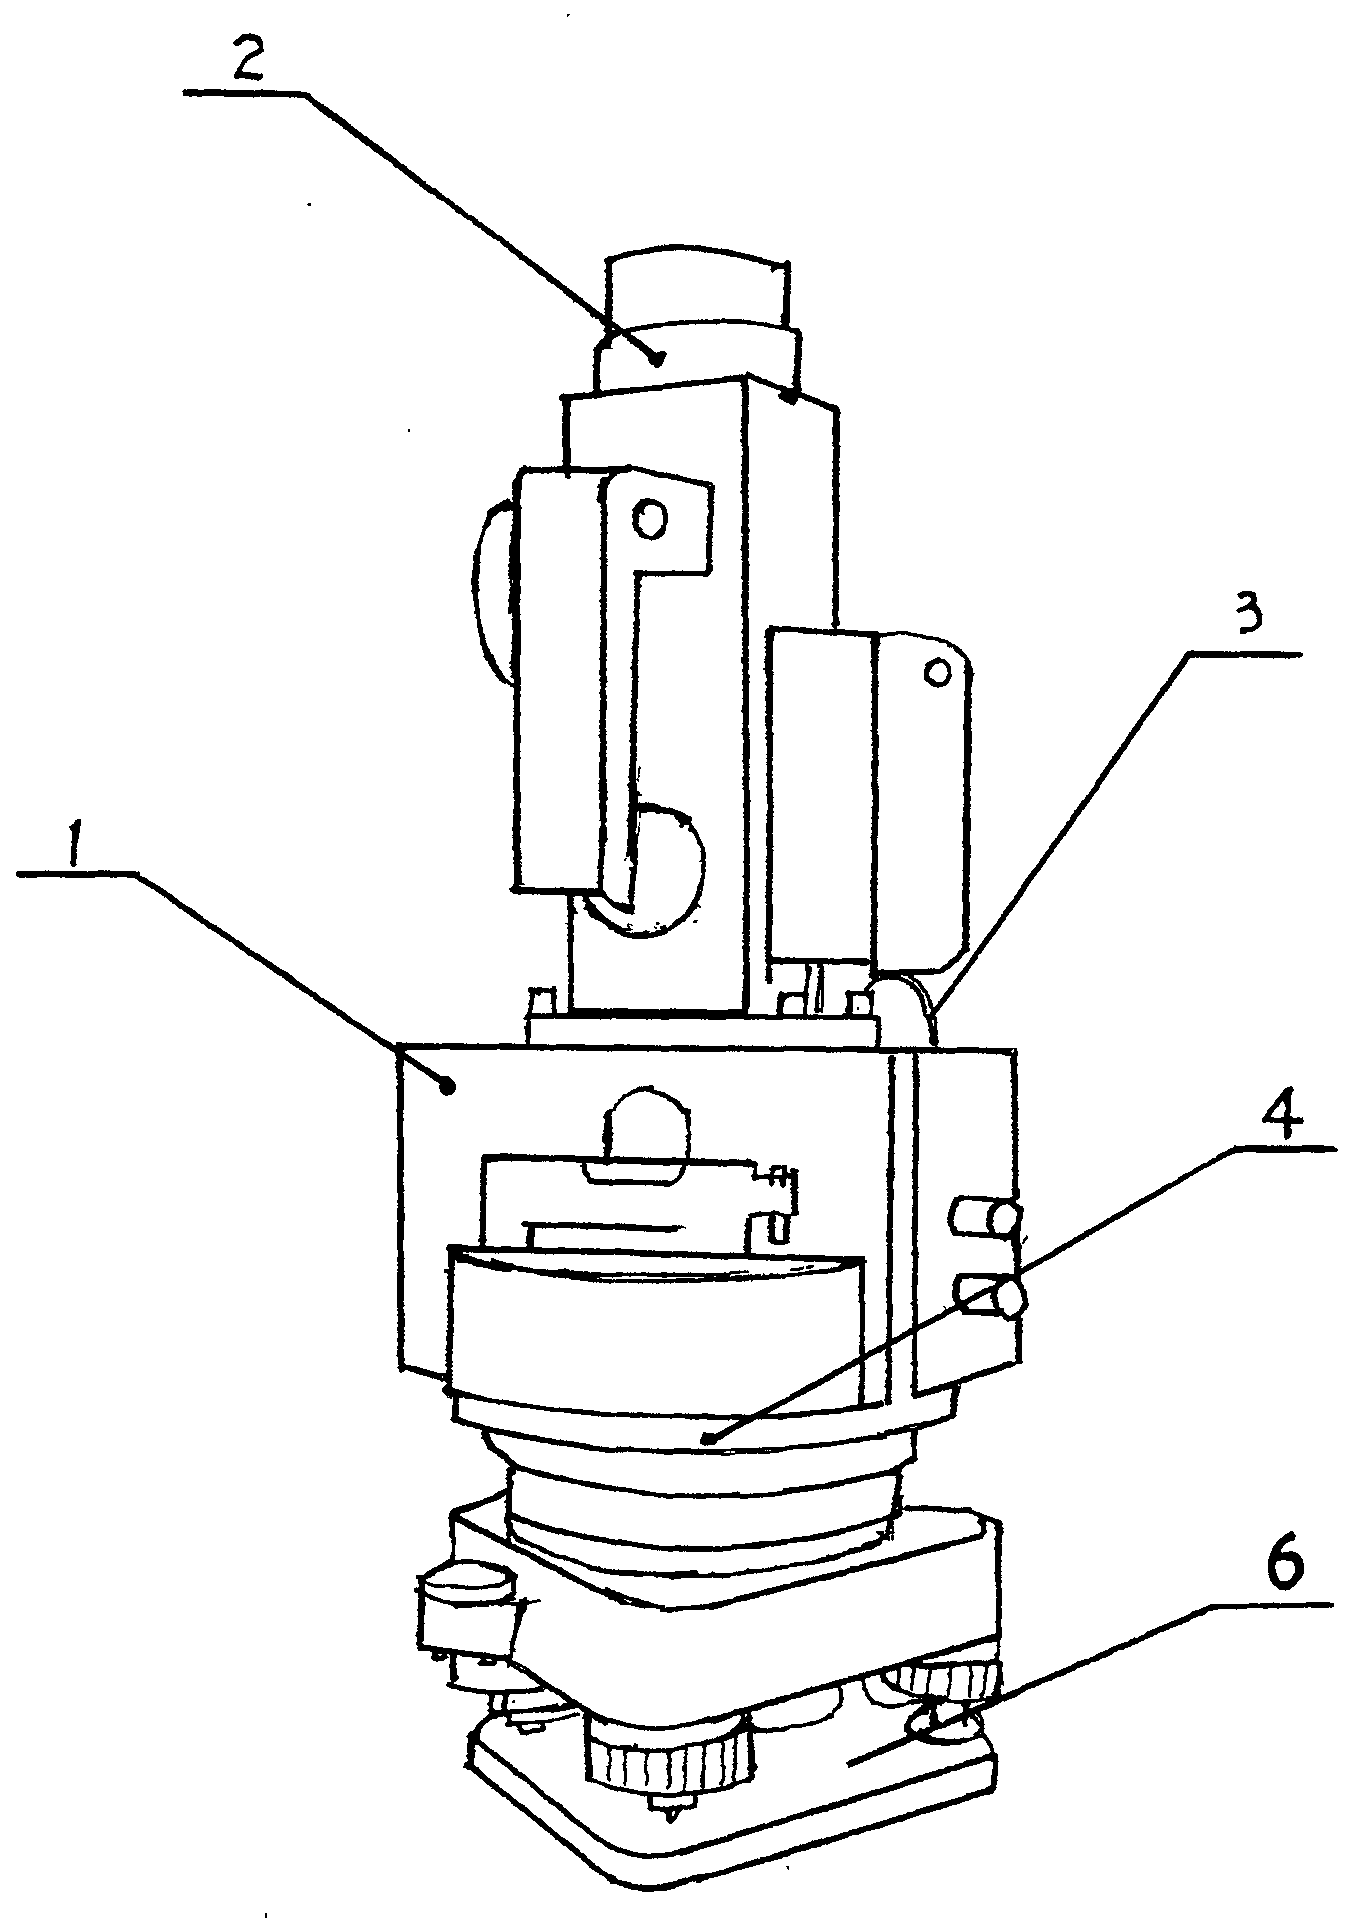 Bidirectional multifunctional laser plumbing apparatus